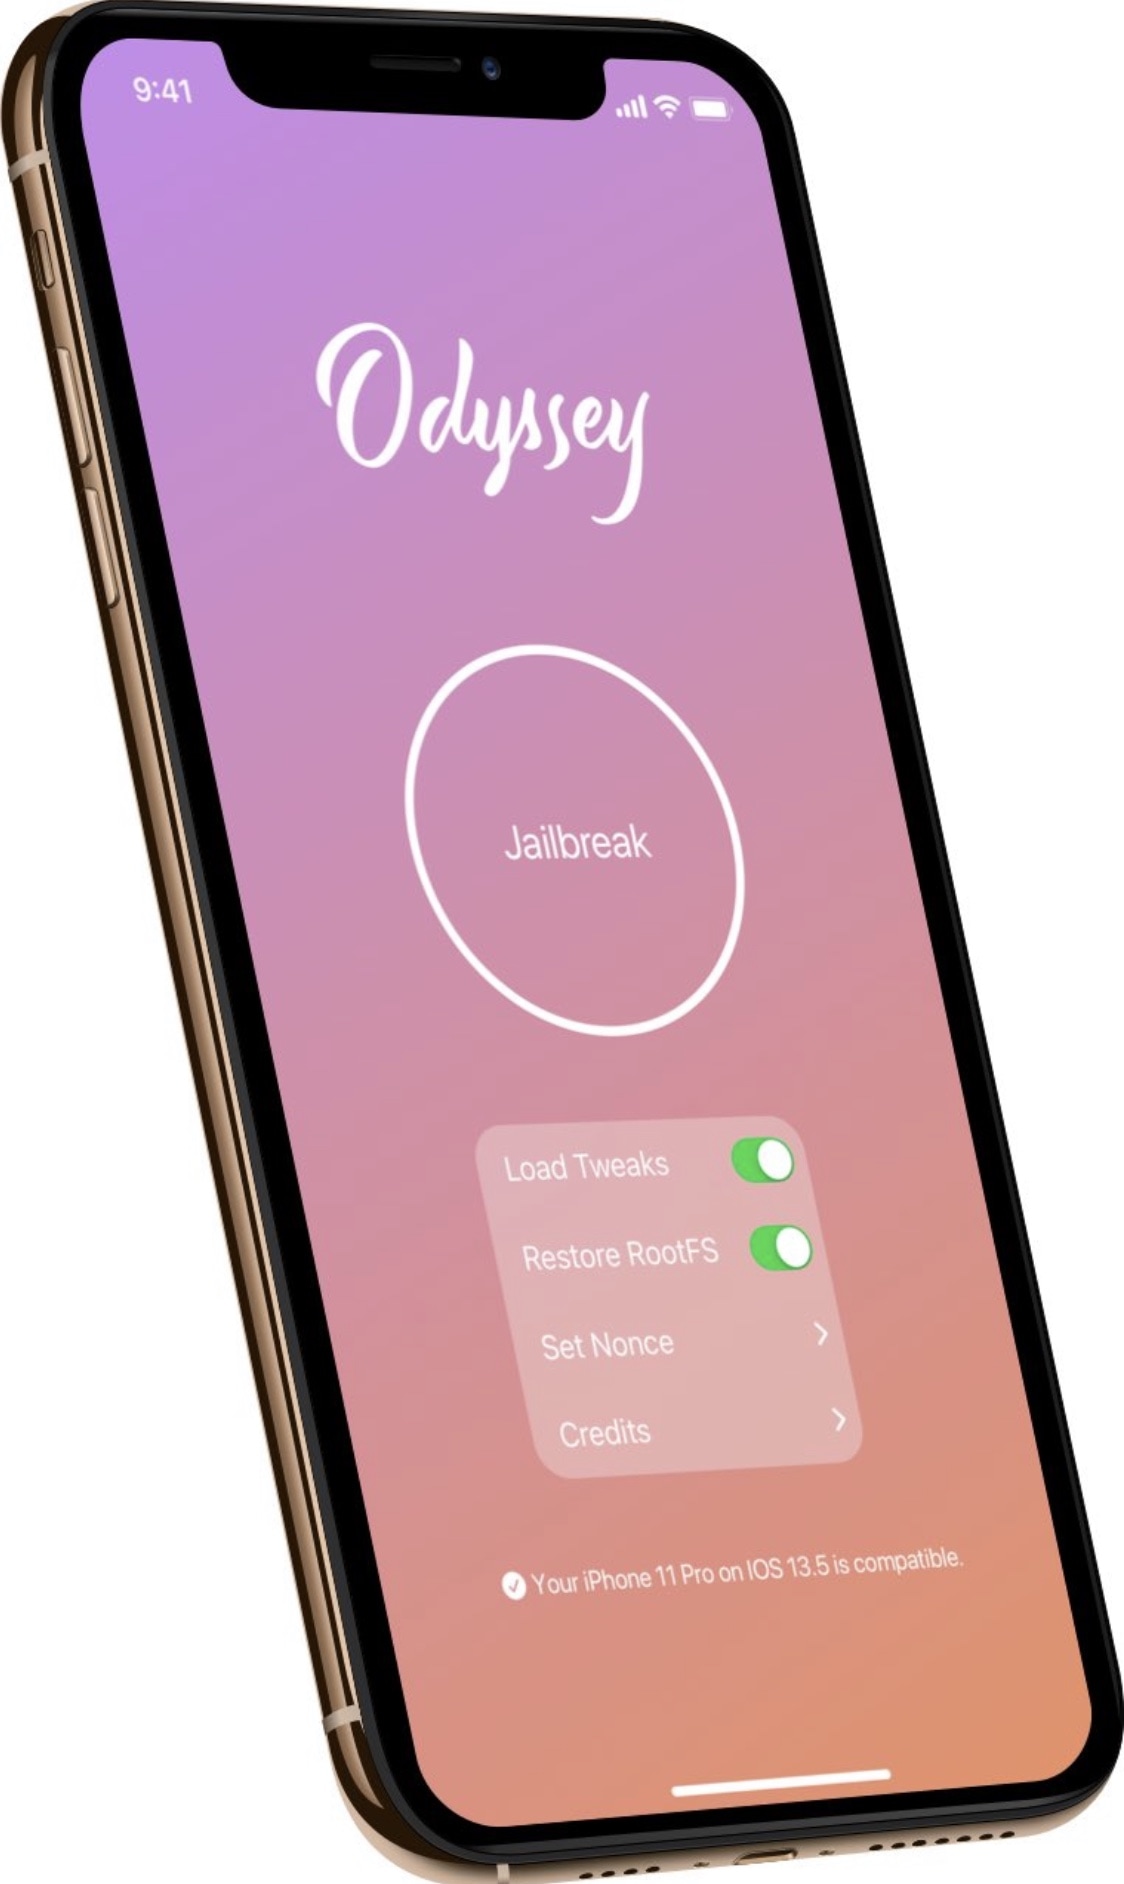 Odyssey jailbreak for iOS 13.